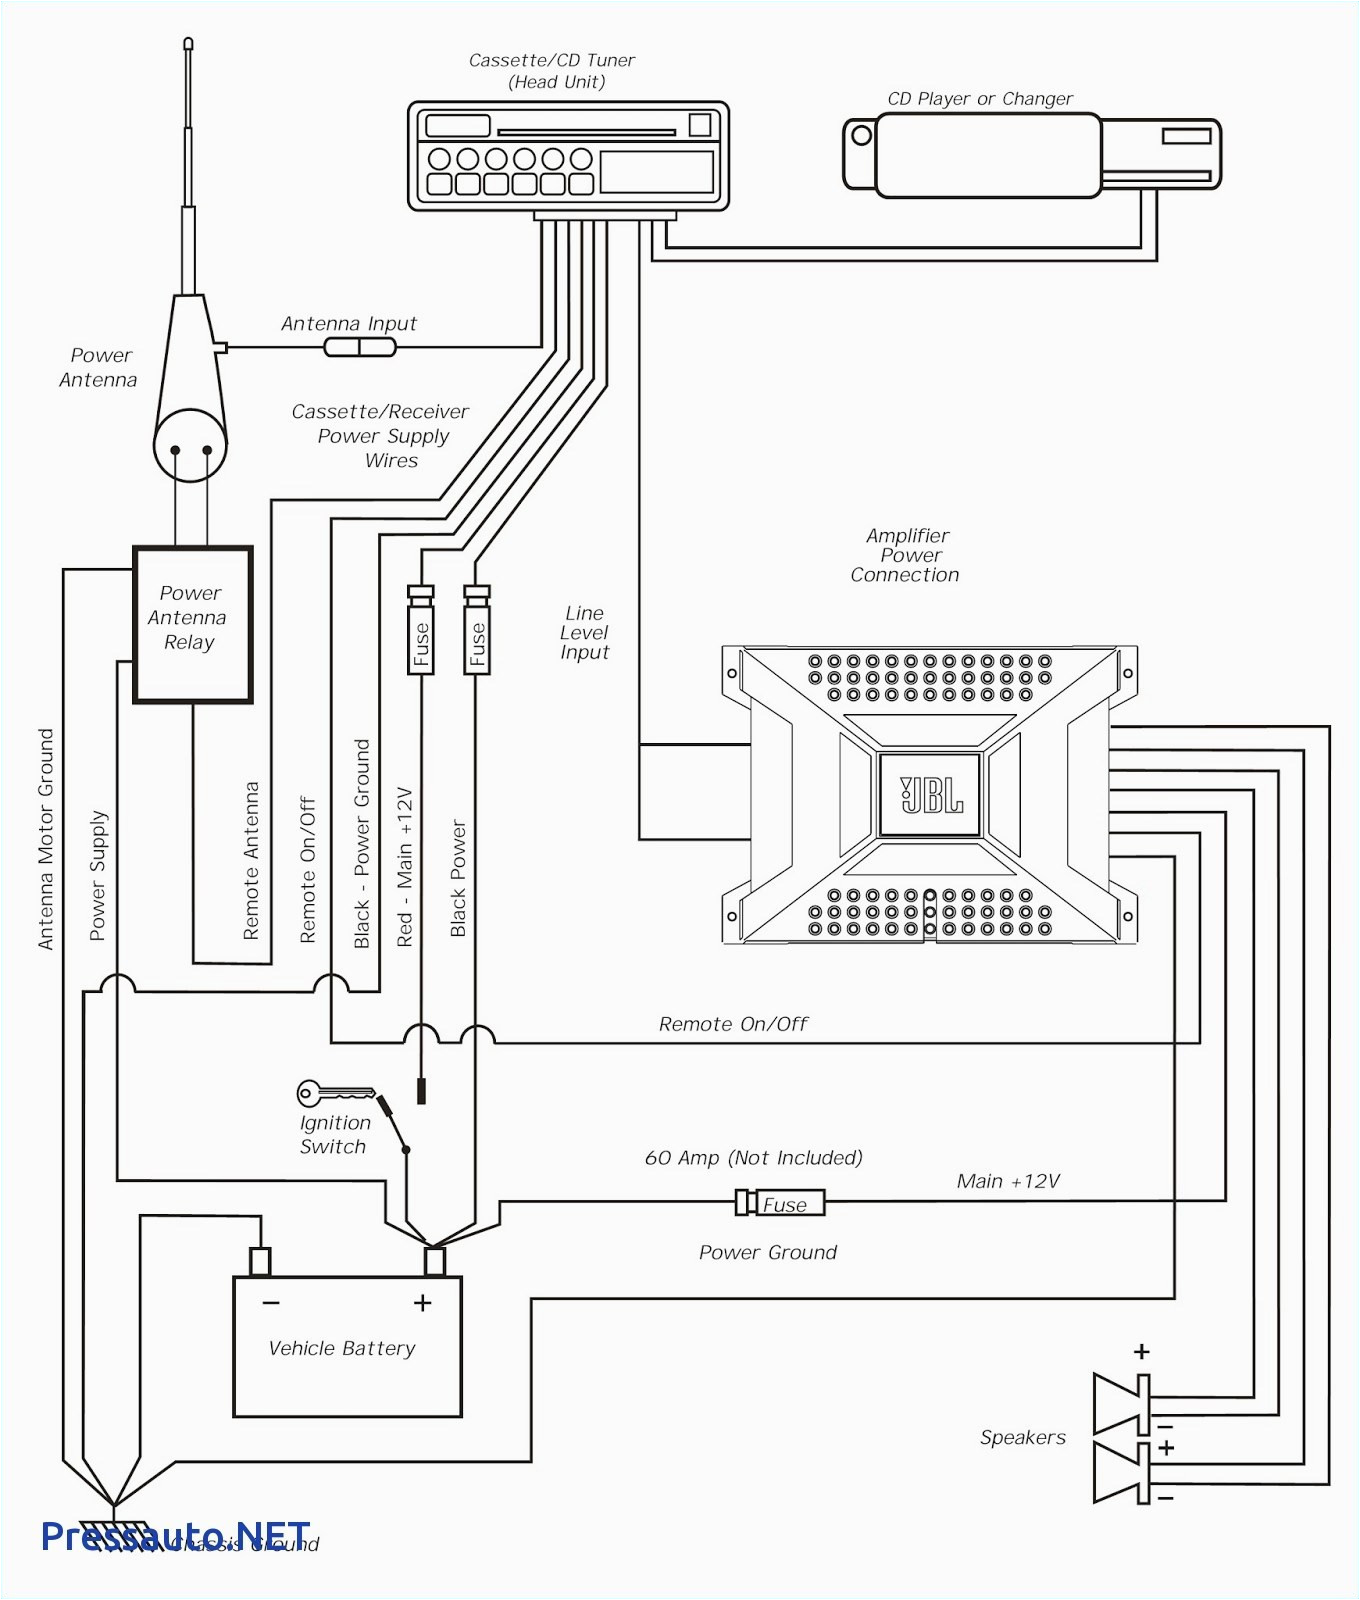 wiring diagram for cd player wiring diagram wiring diagram for aftermarket cd player jvc car stereo